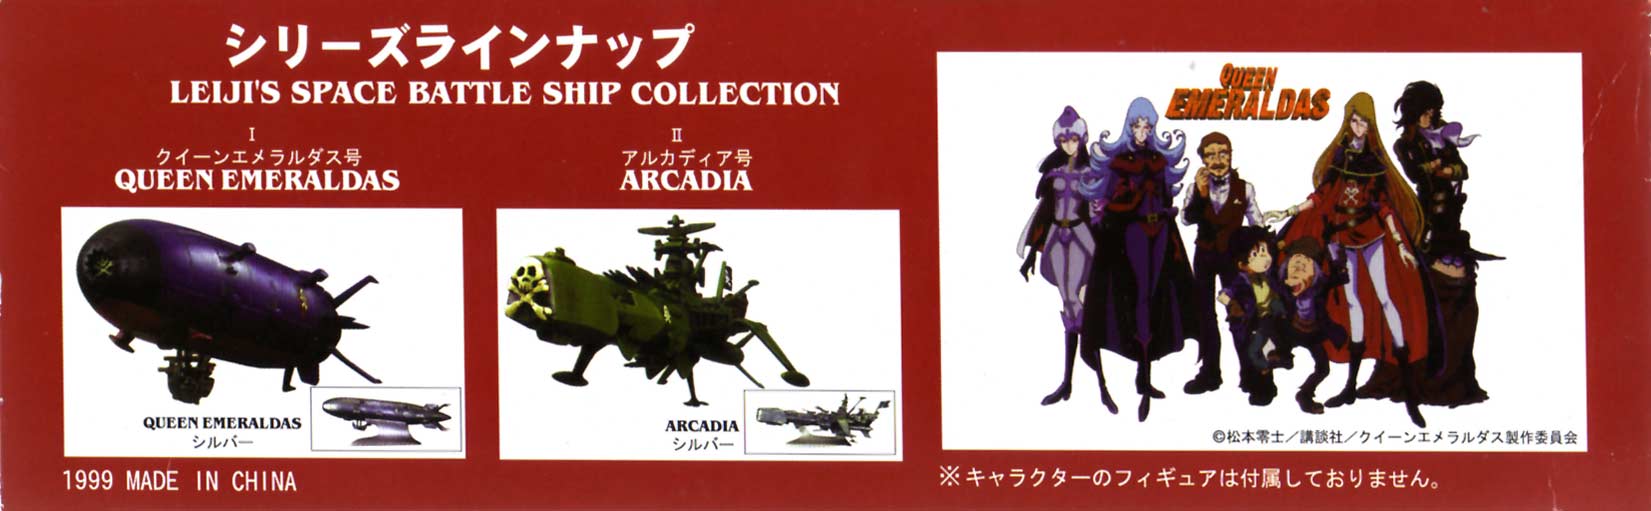 Packaging (latéral gauche) du Queen Emeraldas - Leiji's Space ship collection (jouet)